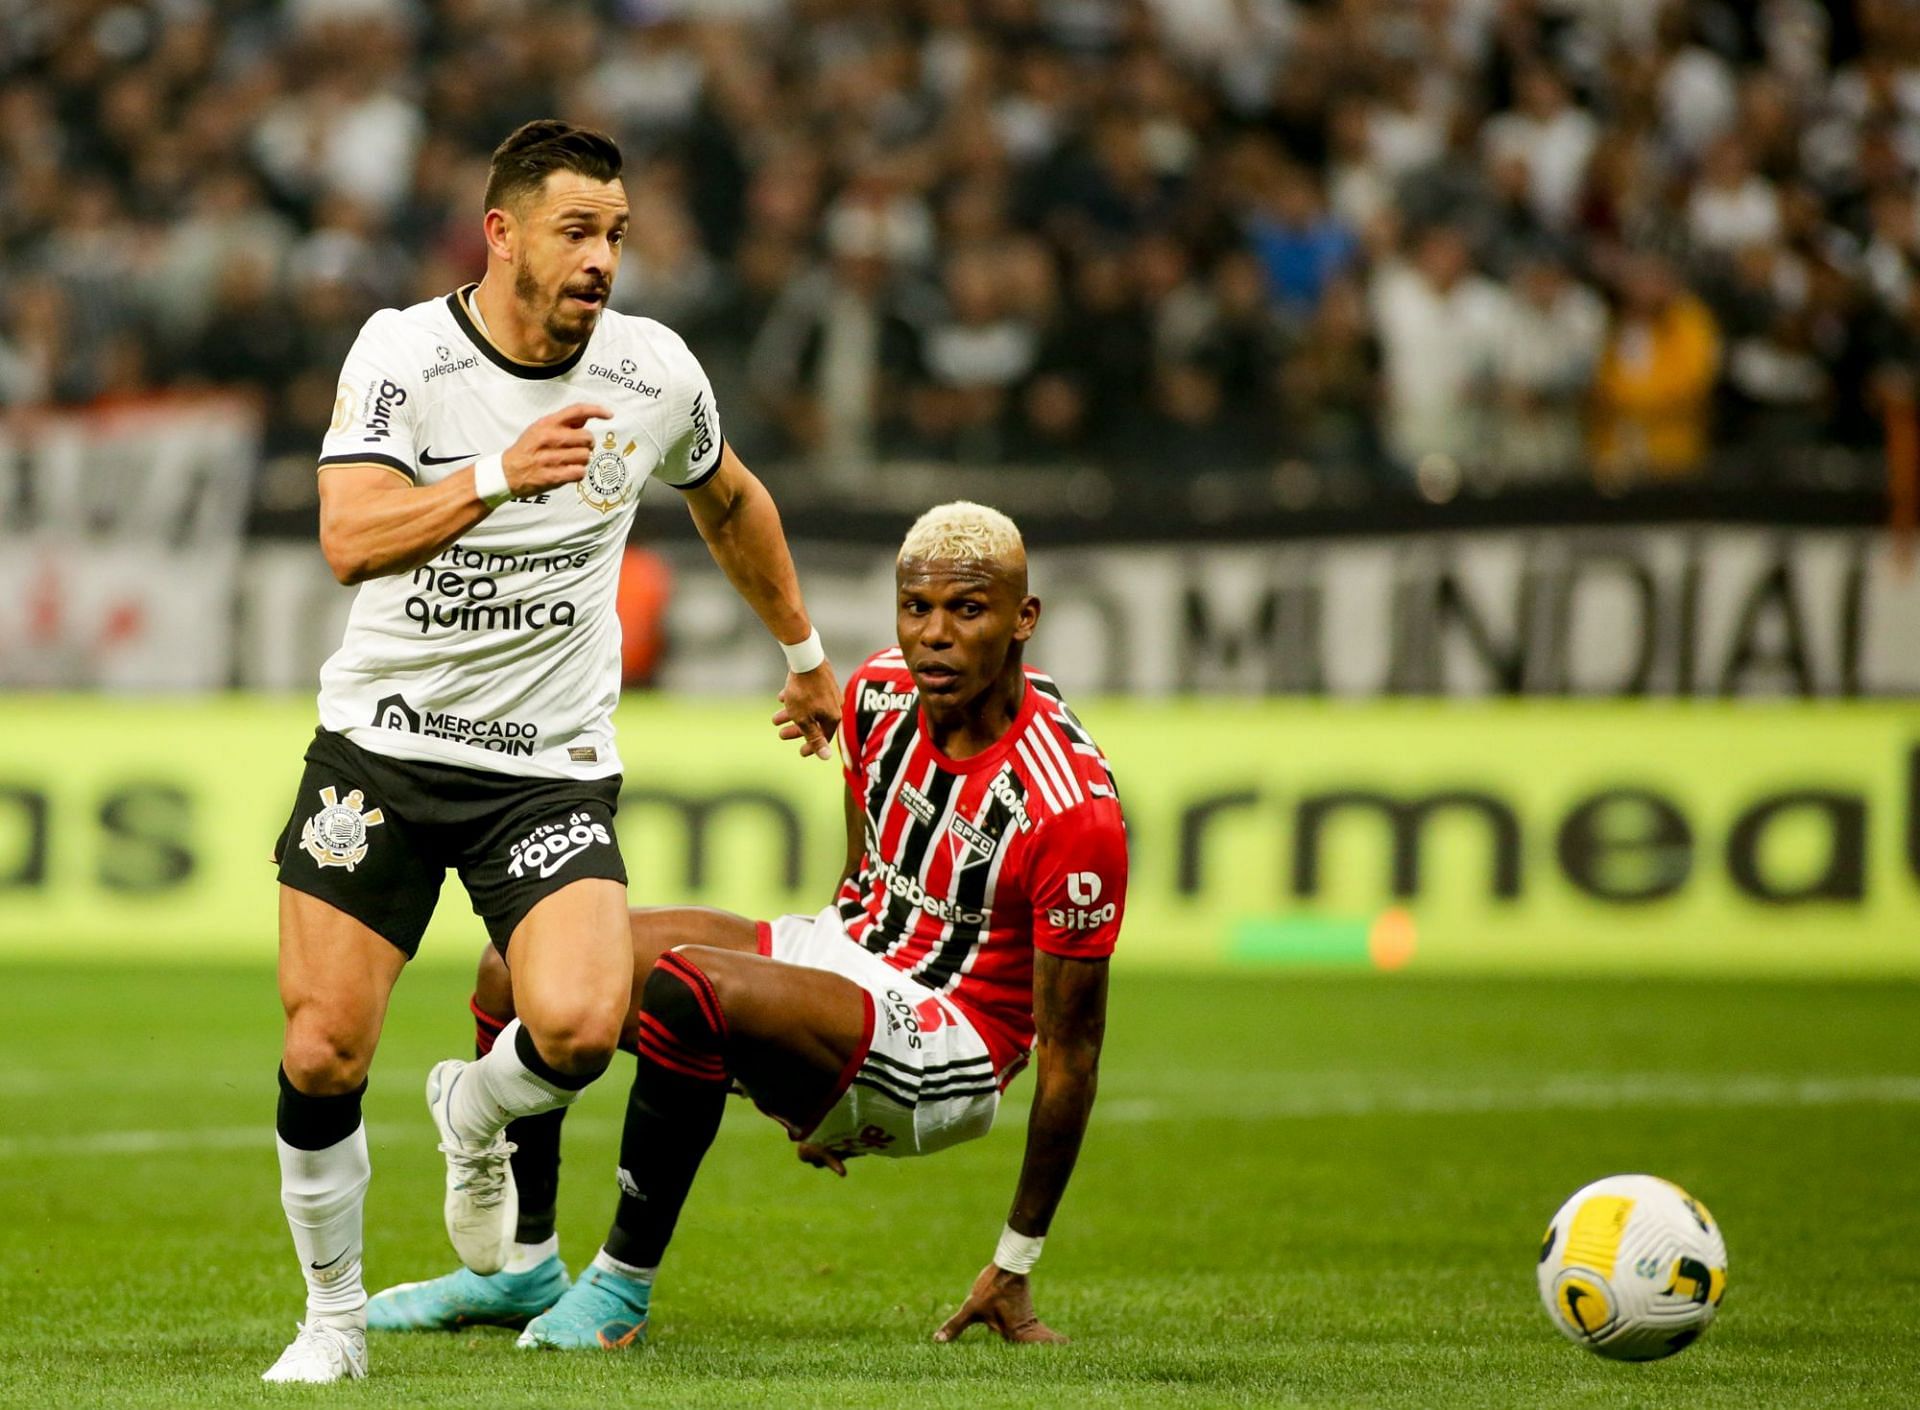 Sao Paulo and Corinthians will square off in the Brazilian Serie A on Saturday